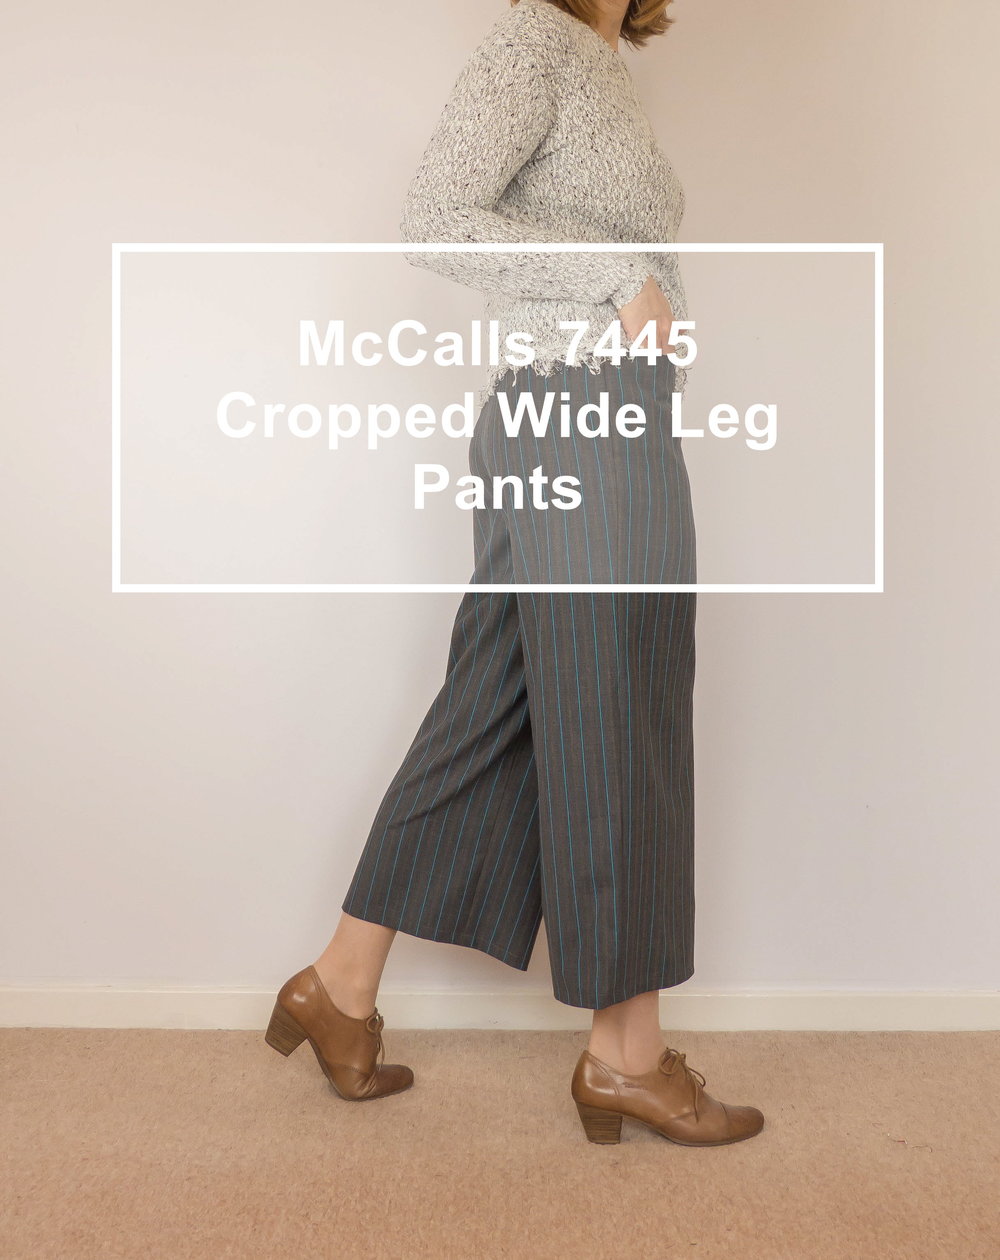 McCalls 7445 cropped wide leg pants